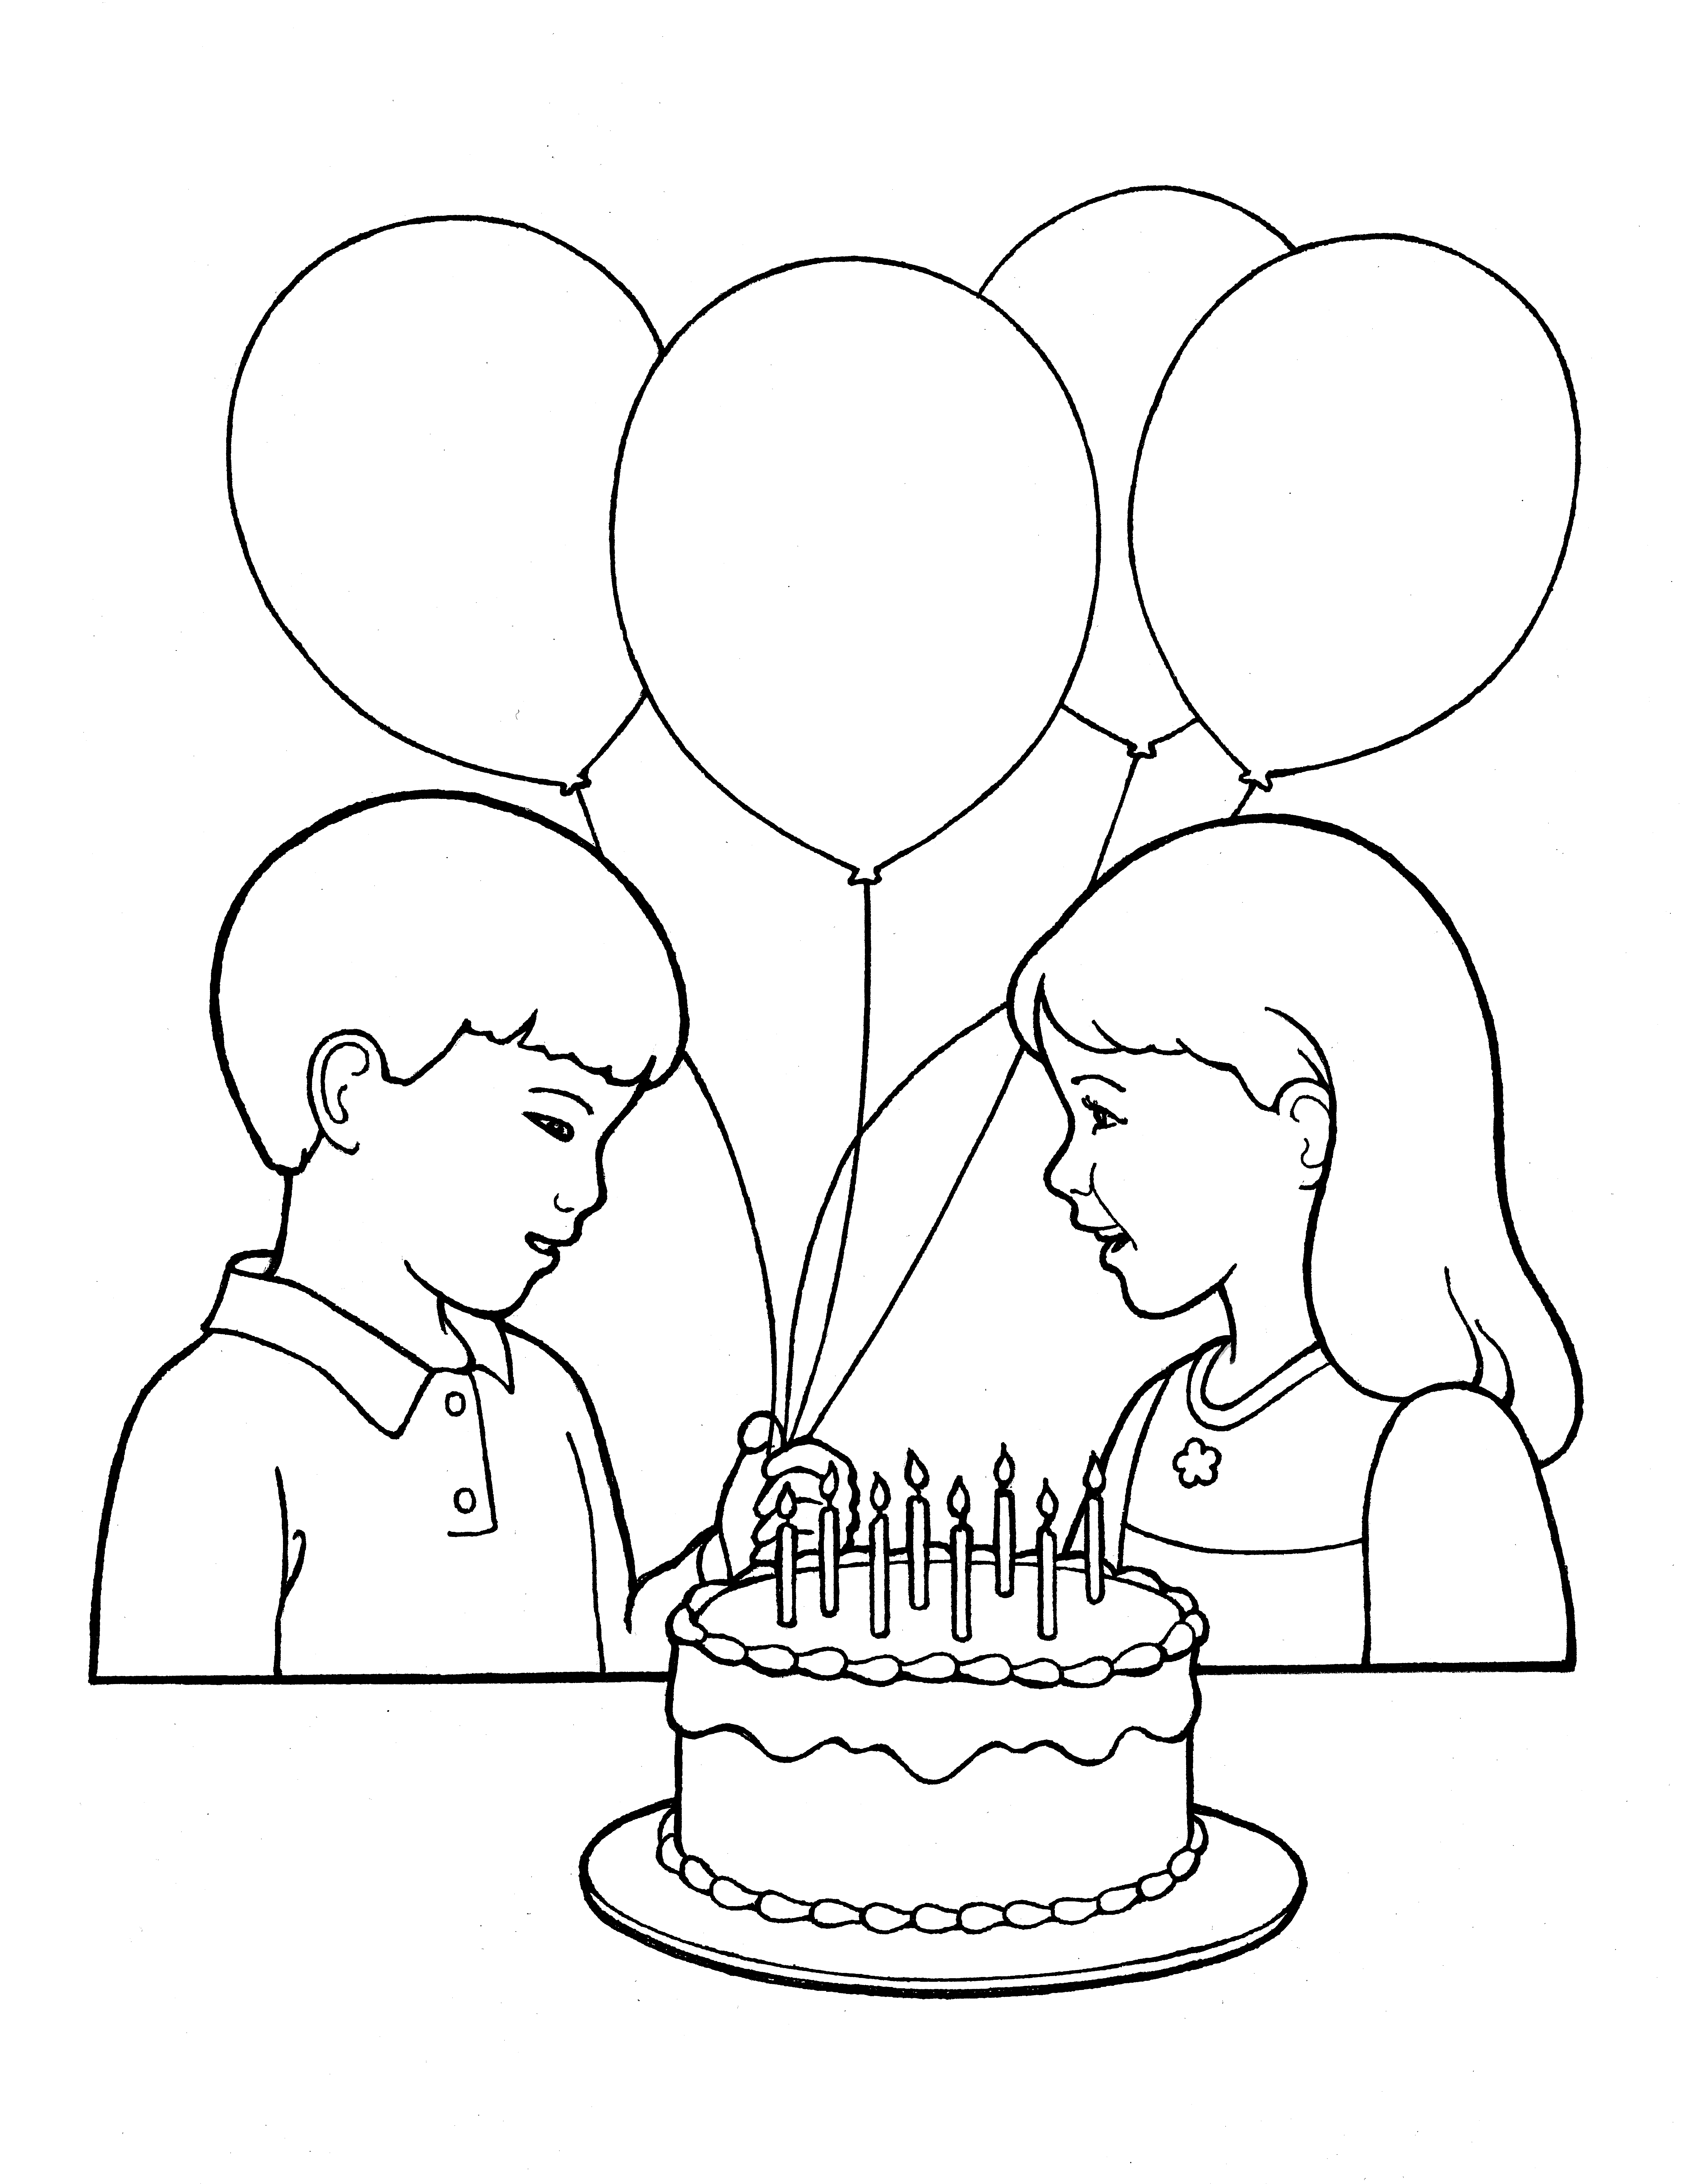 Doodle birthday party seamless pattern  Stock Illustration 95535347   PIXTA